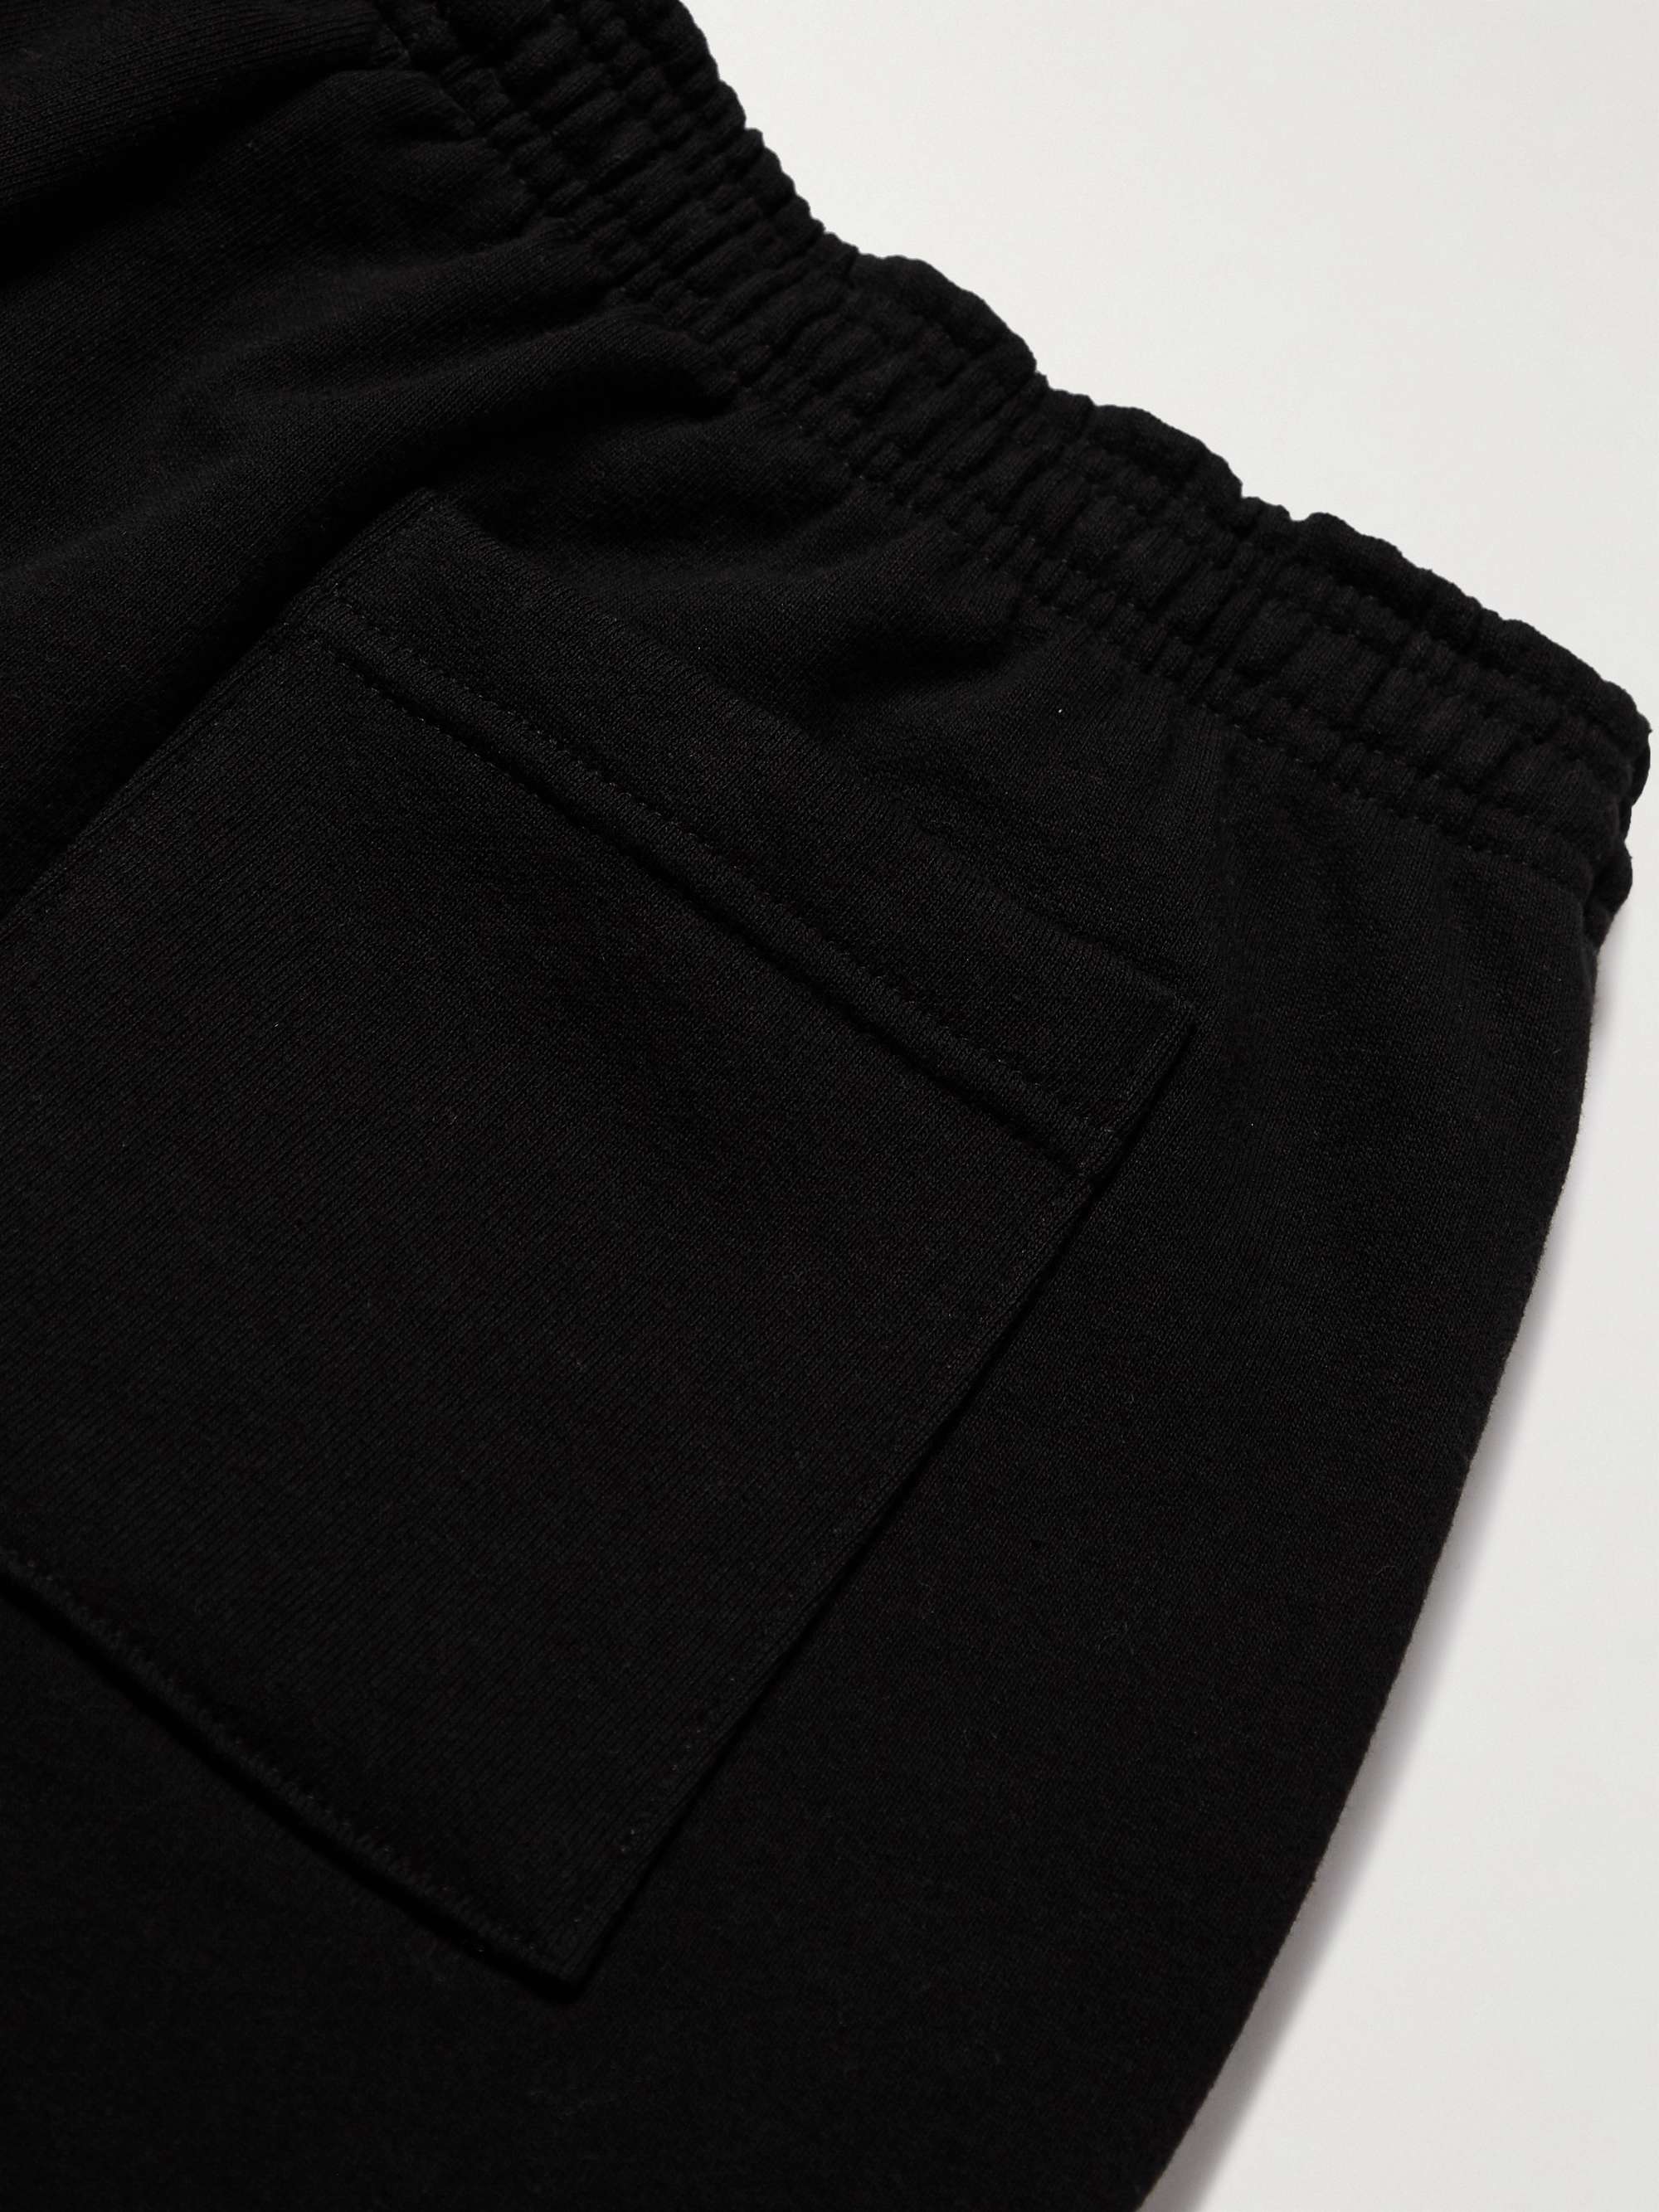 BETTER GIFT SHOP + Sharif Farrag Straight-Leg Logo-Print Cotton-Jersey Shorts